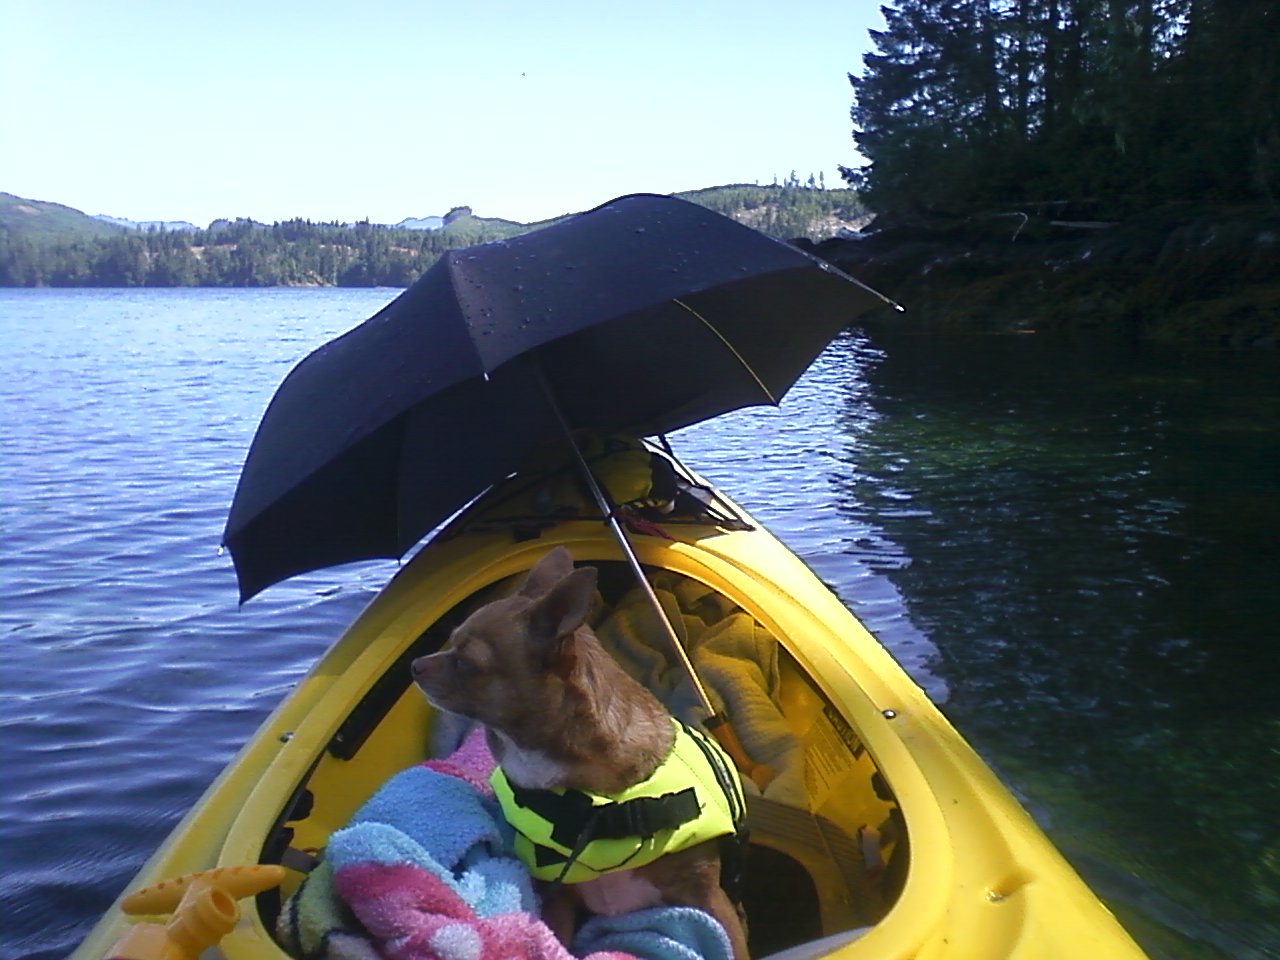 Chloe kayaking with an umbrella